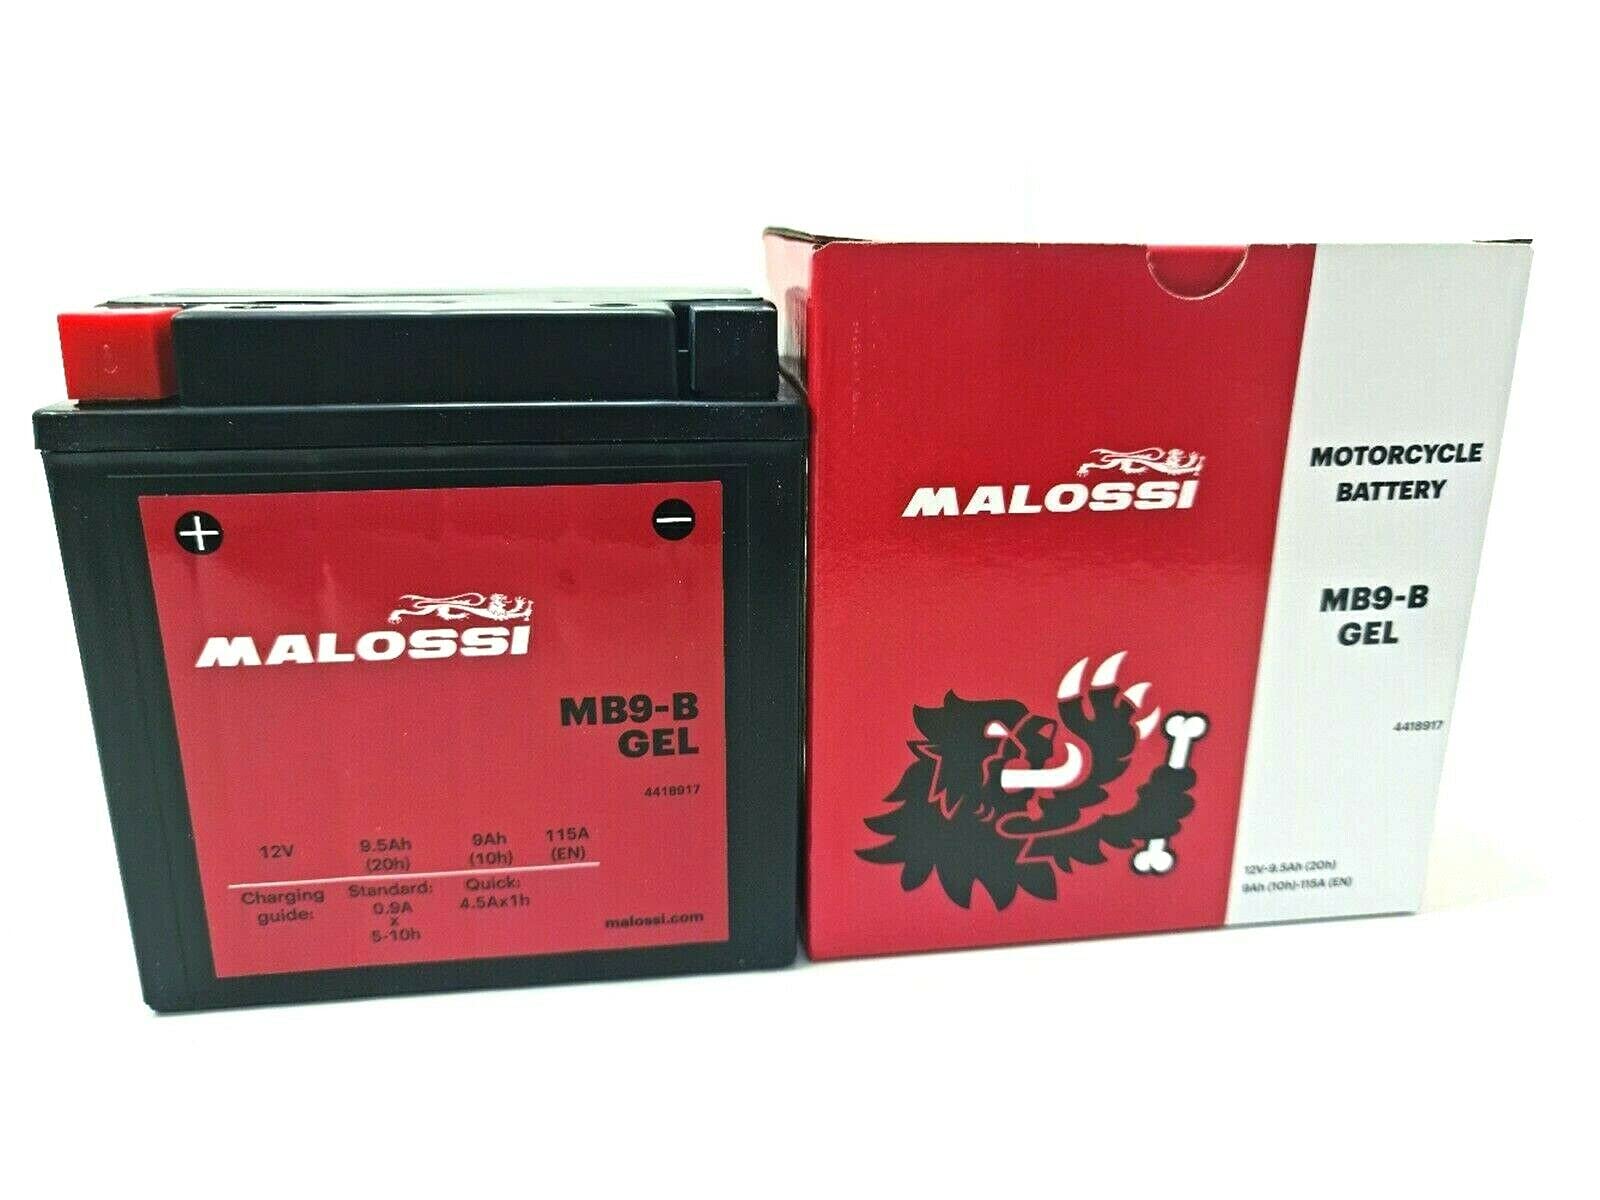 Gel-Batterie Malossi MB9-B gebrauchsfertig Vespa PX 125 150 200 ml von MALOSSI